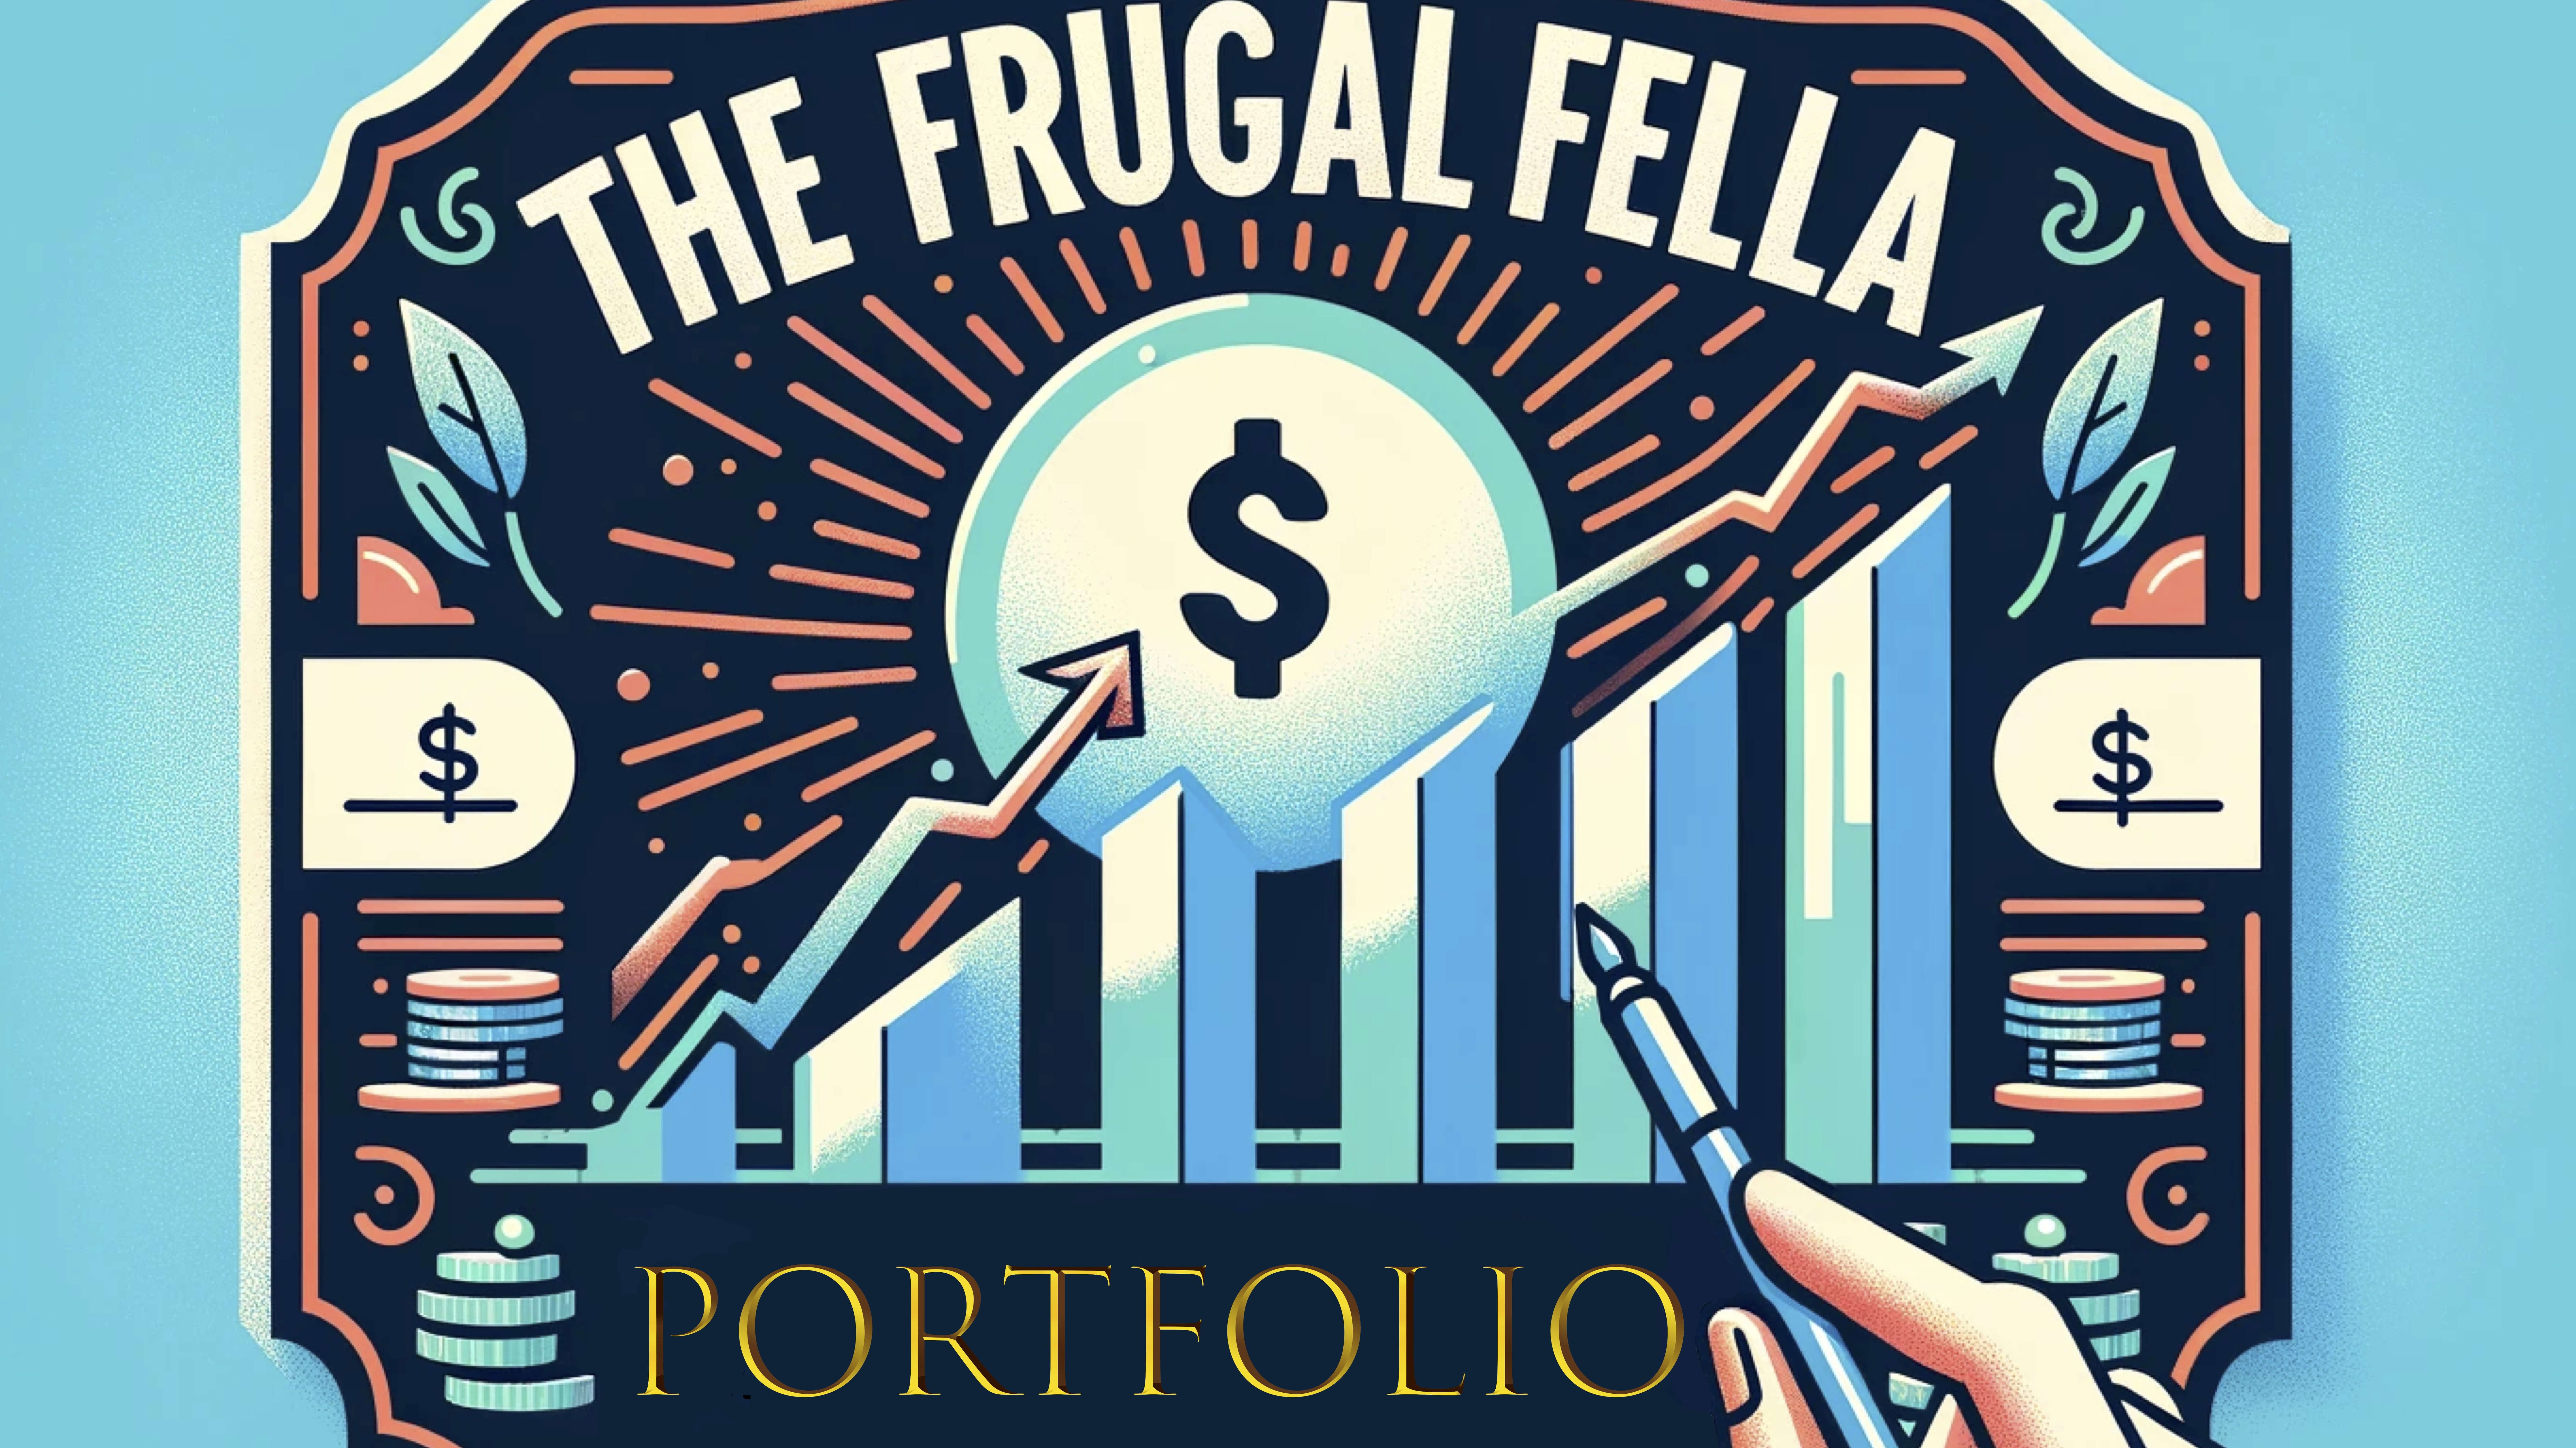 TheFrugalFella Portfolio